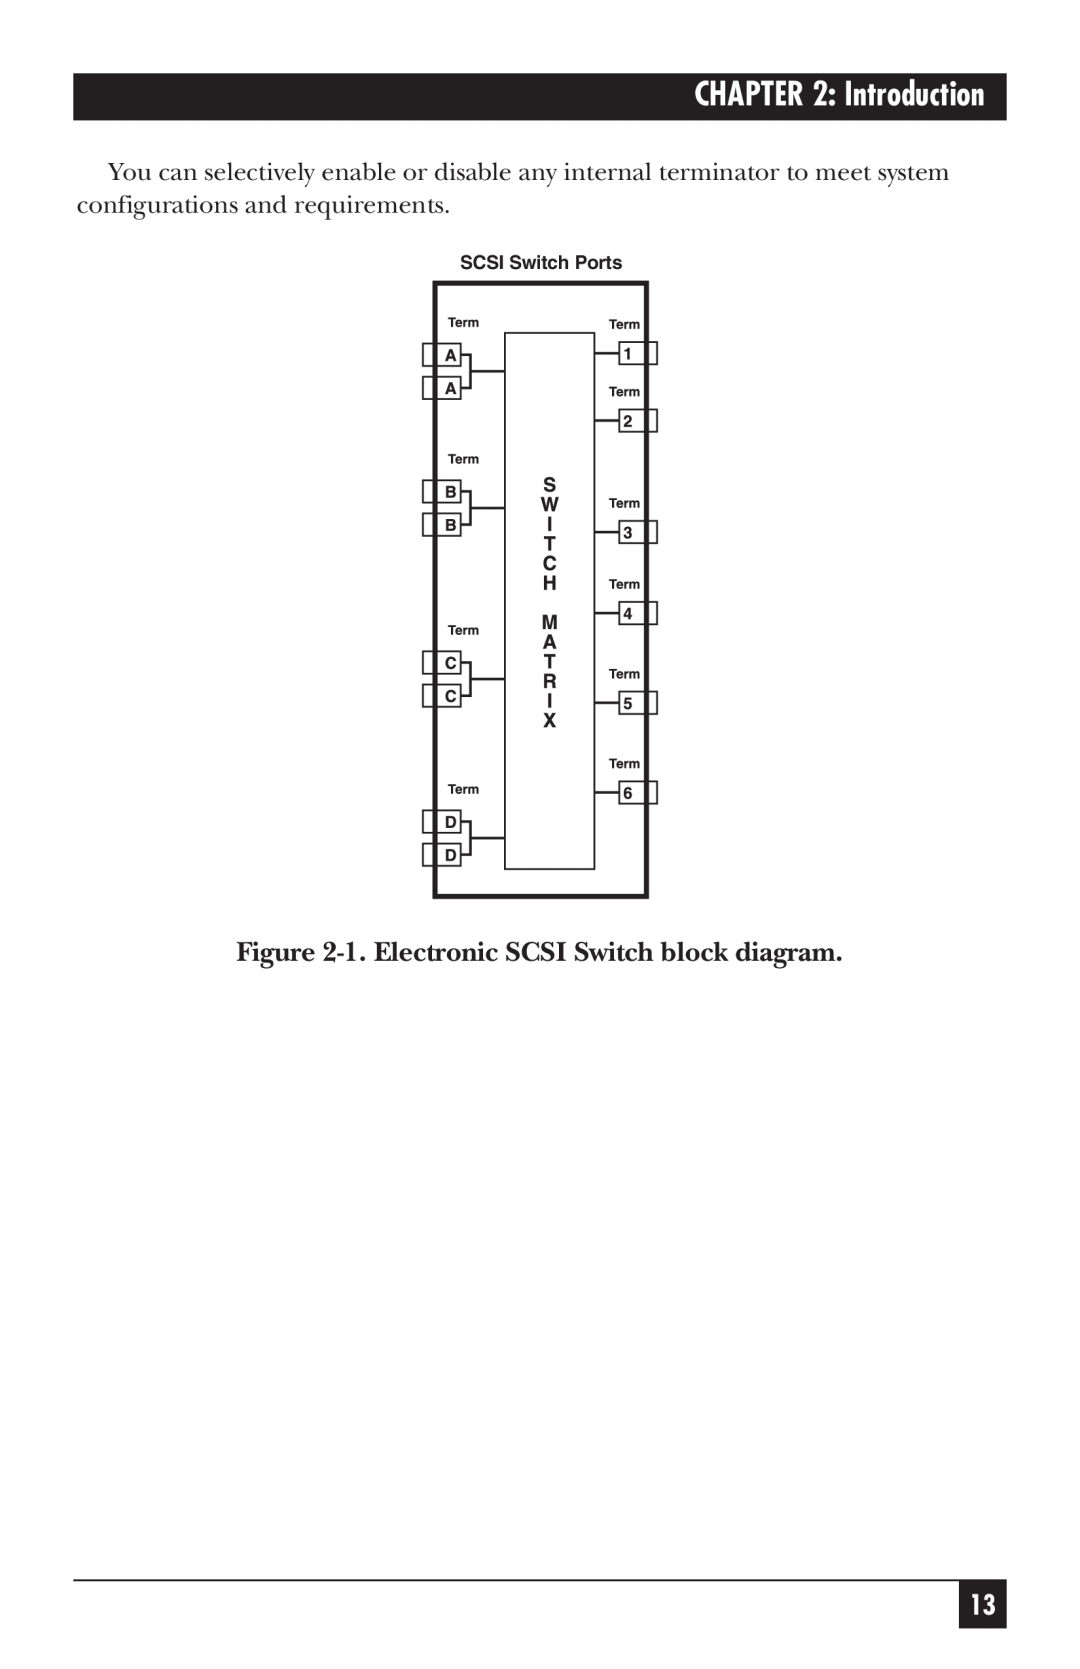 Black Box SW487A-R2 manual 1. Electronic SCSI Switch block diagram, Introduction, SCSI Switch Ports 